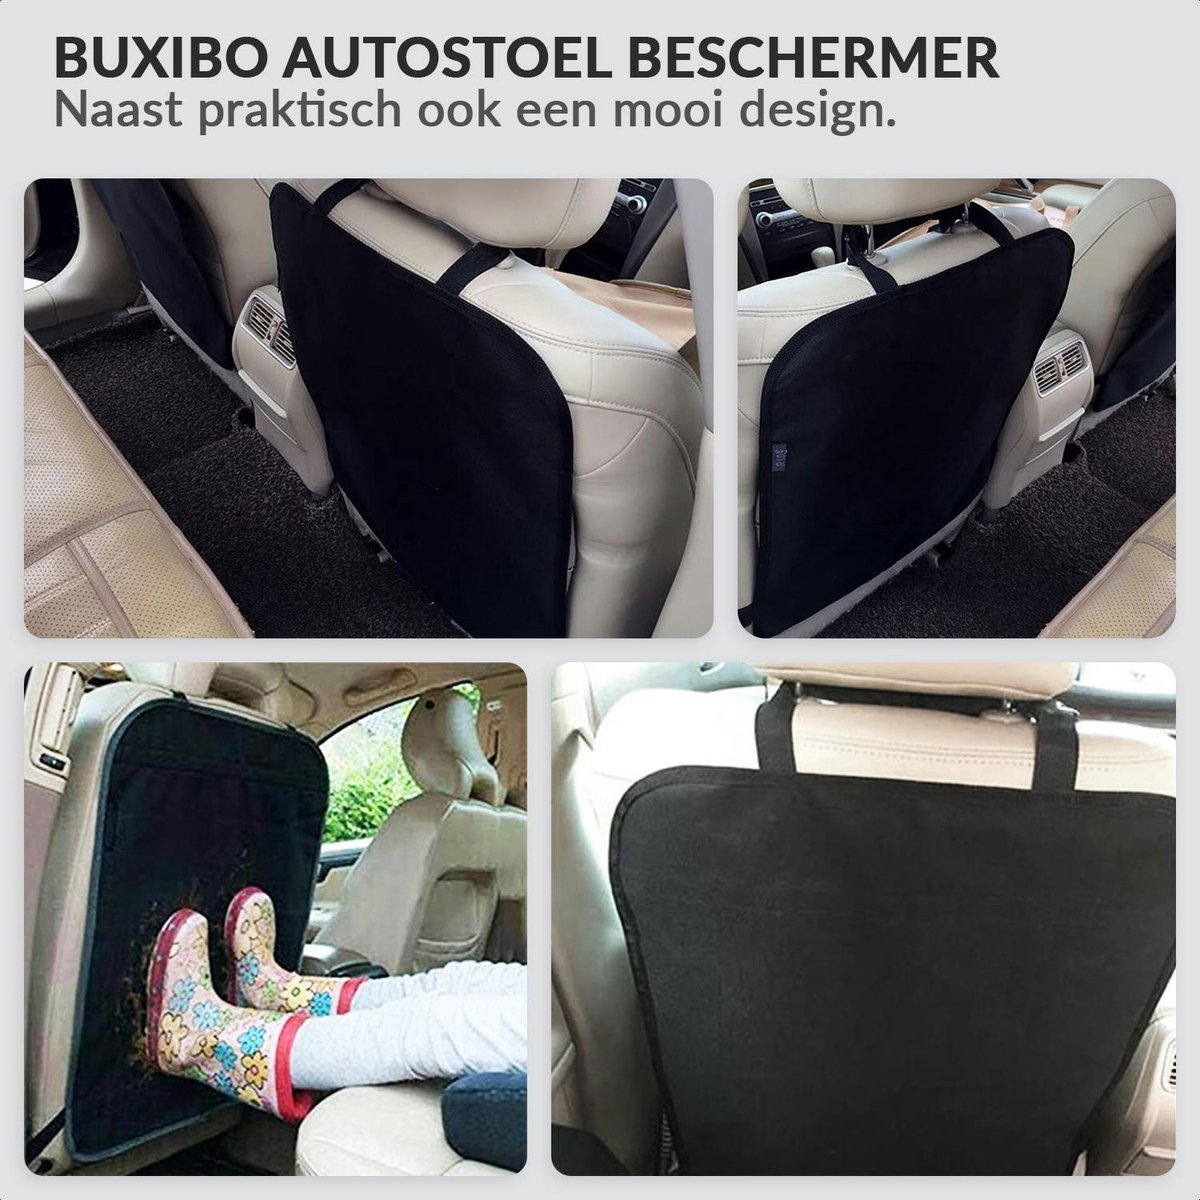 Buxibo Auto Stoelbeschermer - Auto Stoelhoes - Achterkant Autostoel | bol.com